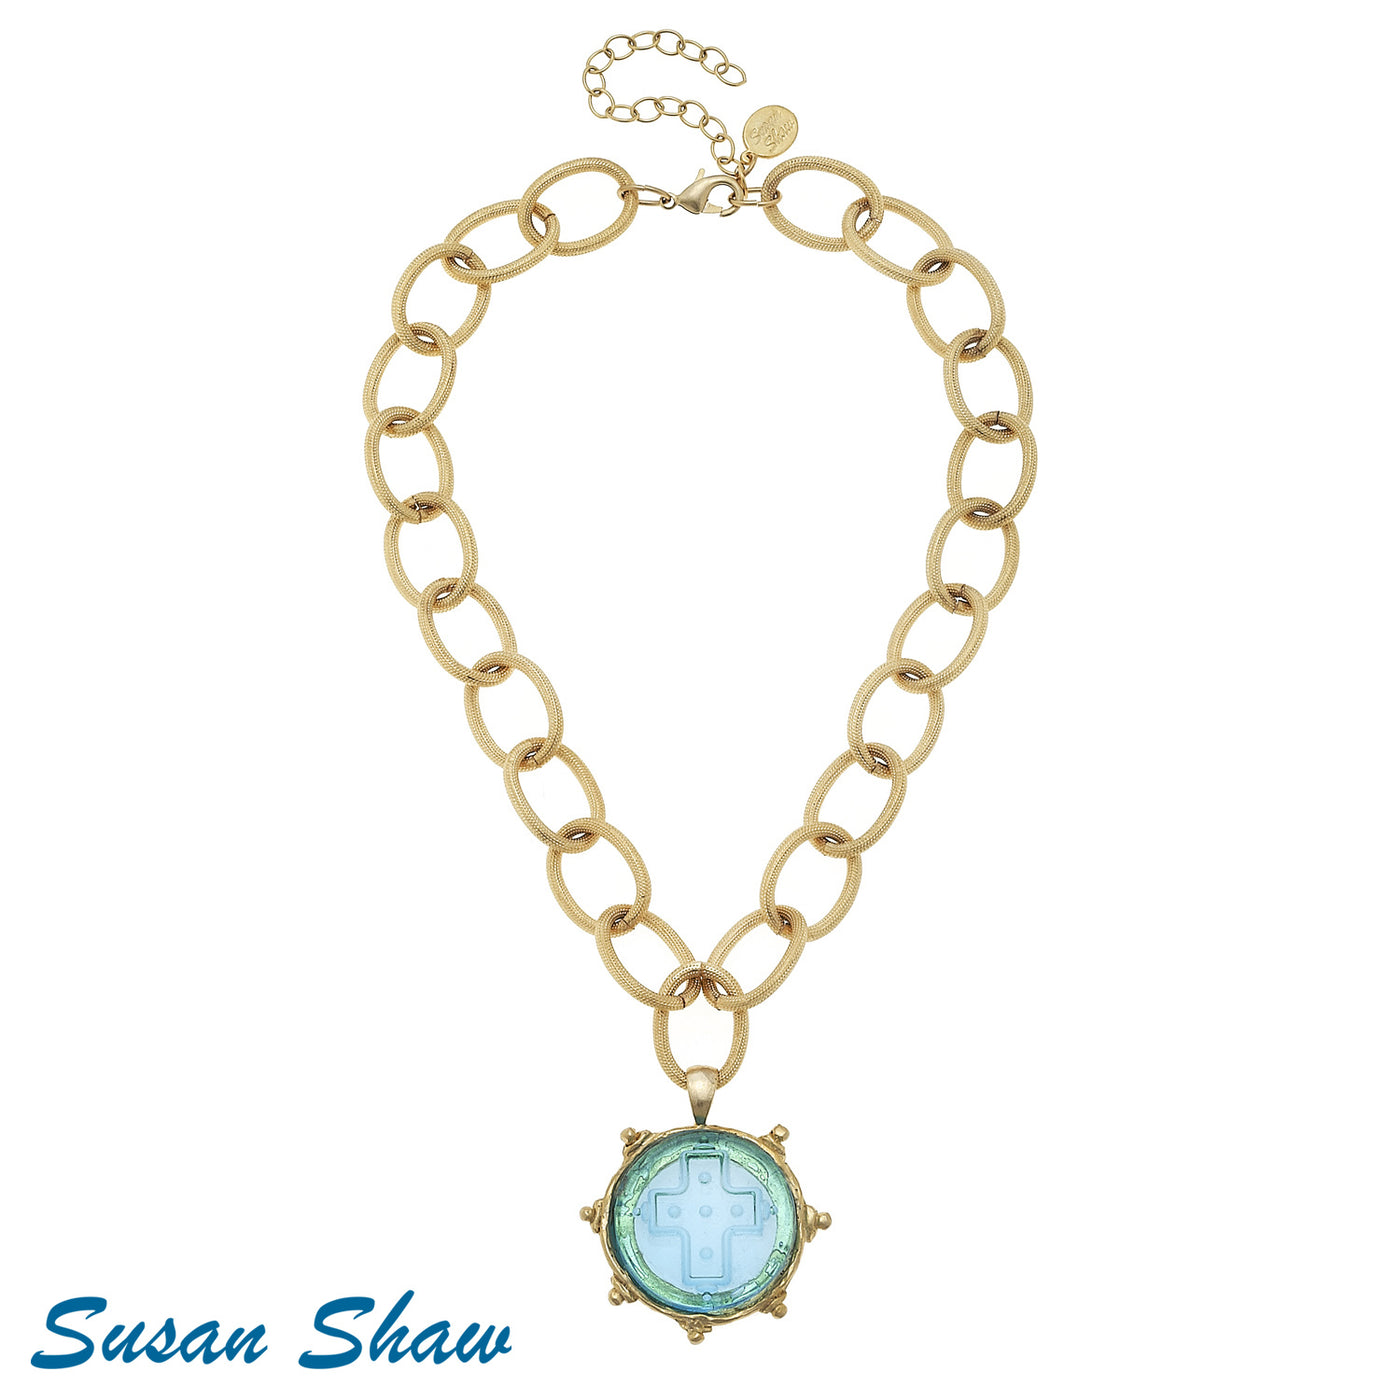 Susan Shaw Venetian Glass Cross Necklace